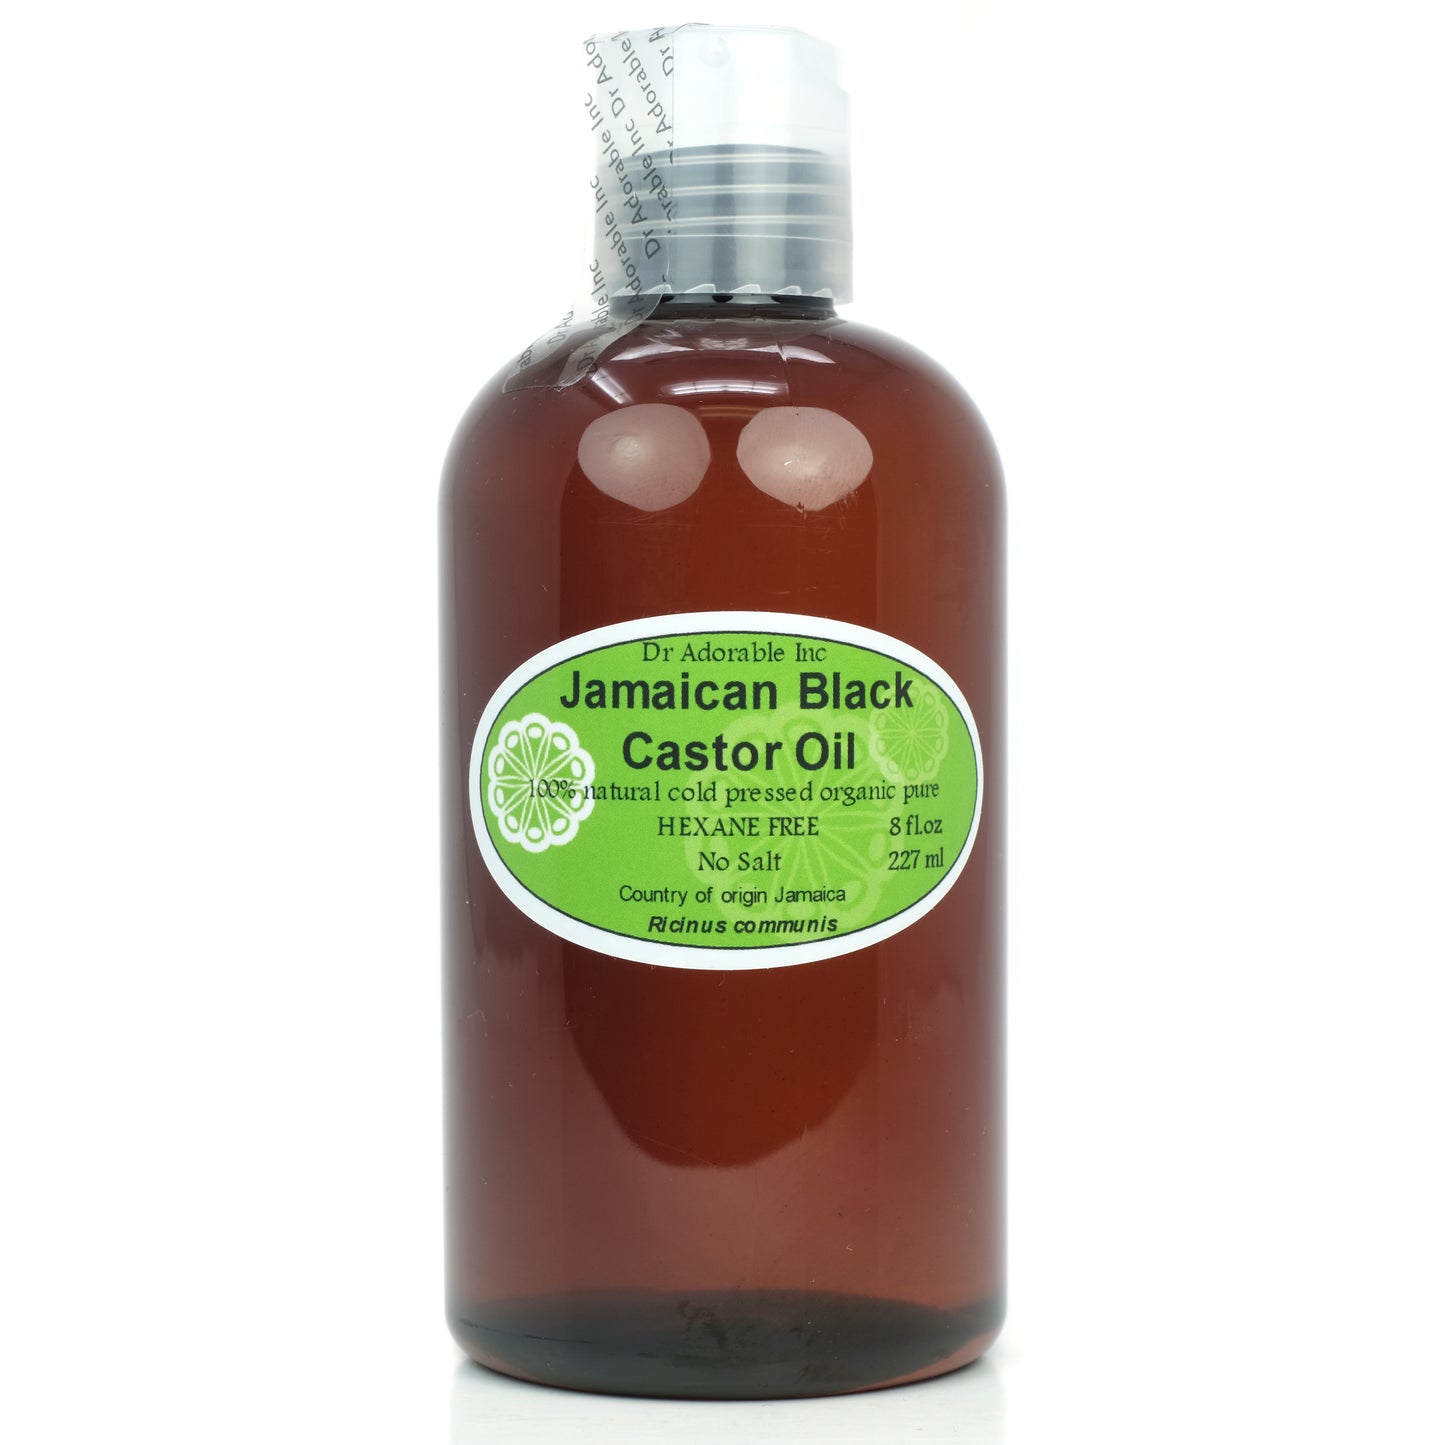 Jamaican Black Castor Oil - Pure Natural Organic Strengthen Grow & Restore Hair Care